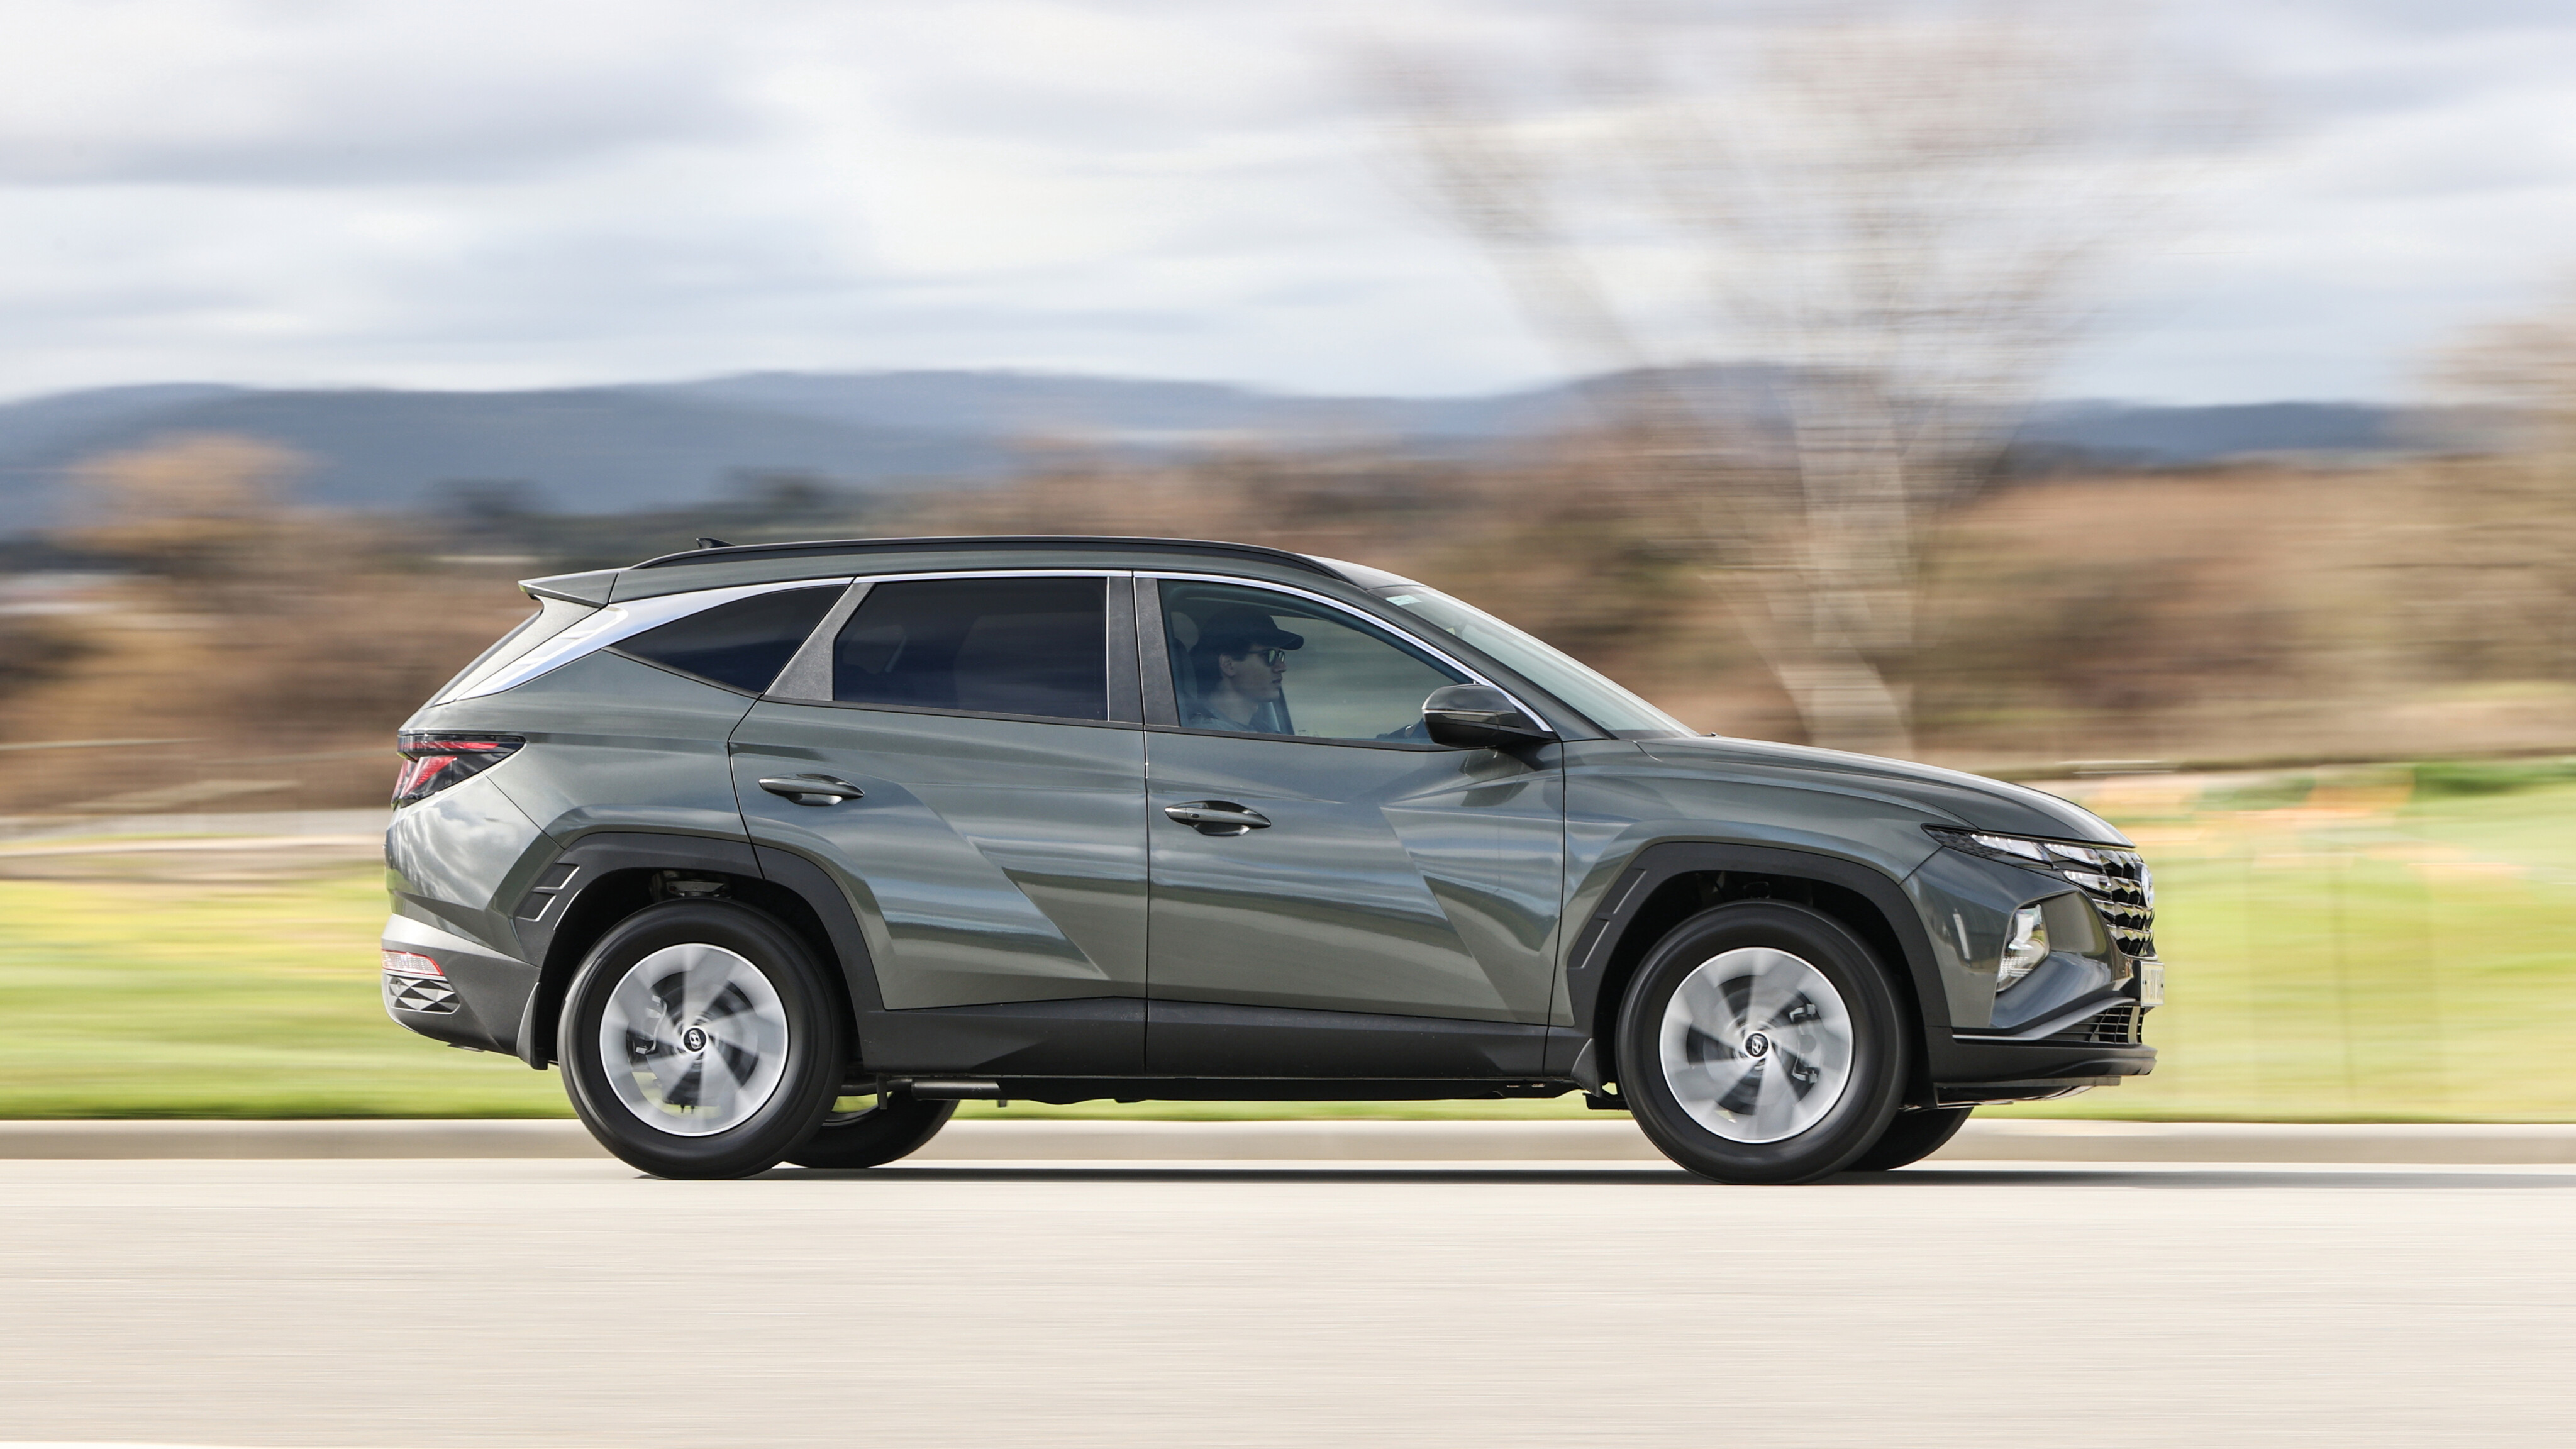 2021 Hyundai Tucson review: Elite 1.6 turbo petrol